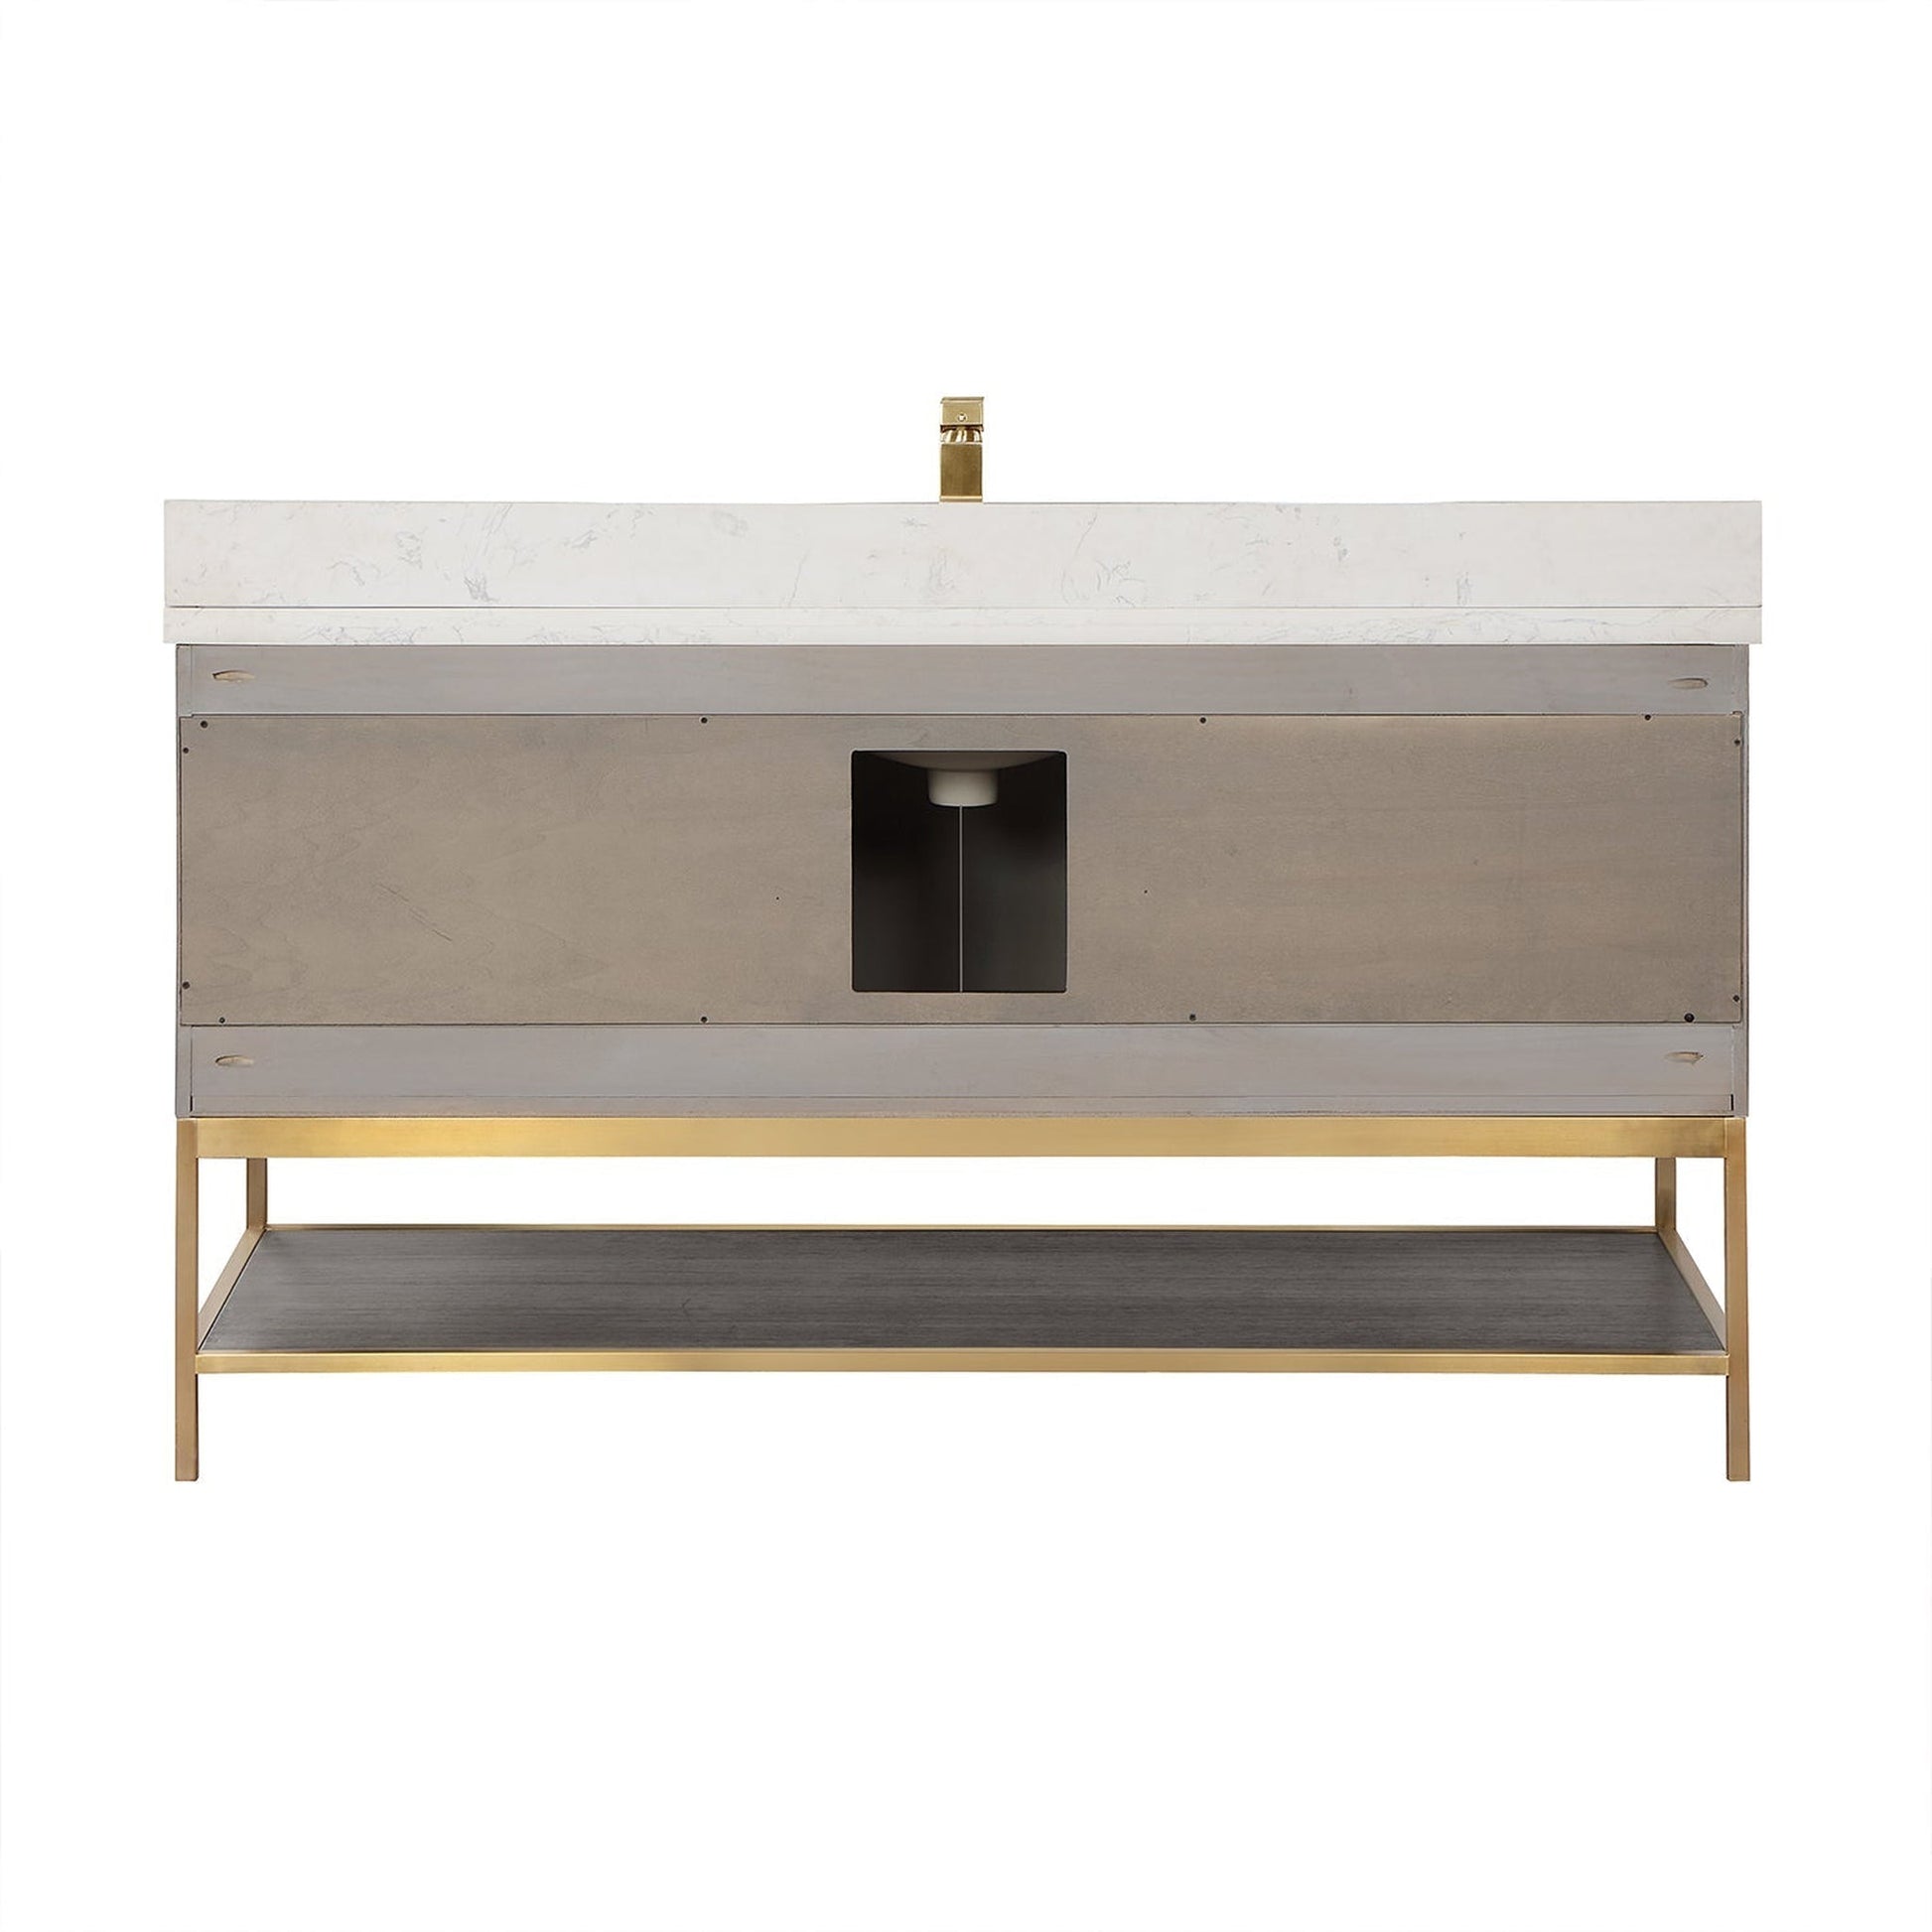 Altair Wildy 60" Classical Grey Freestanding Single Bathroom Vanity Set With Stylish Composite Grain White Stone Top, Rectangular Undermount Ceramic Sink, Overflow, and Backsplash